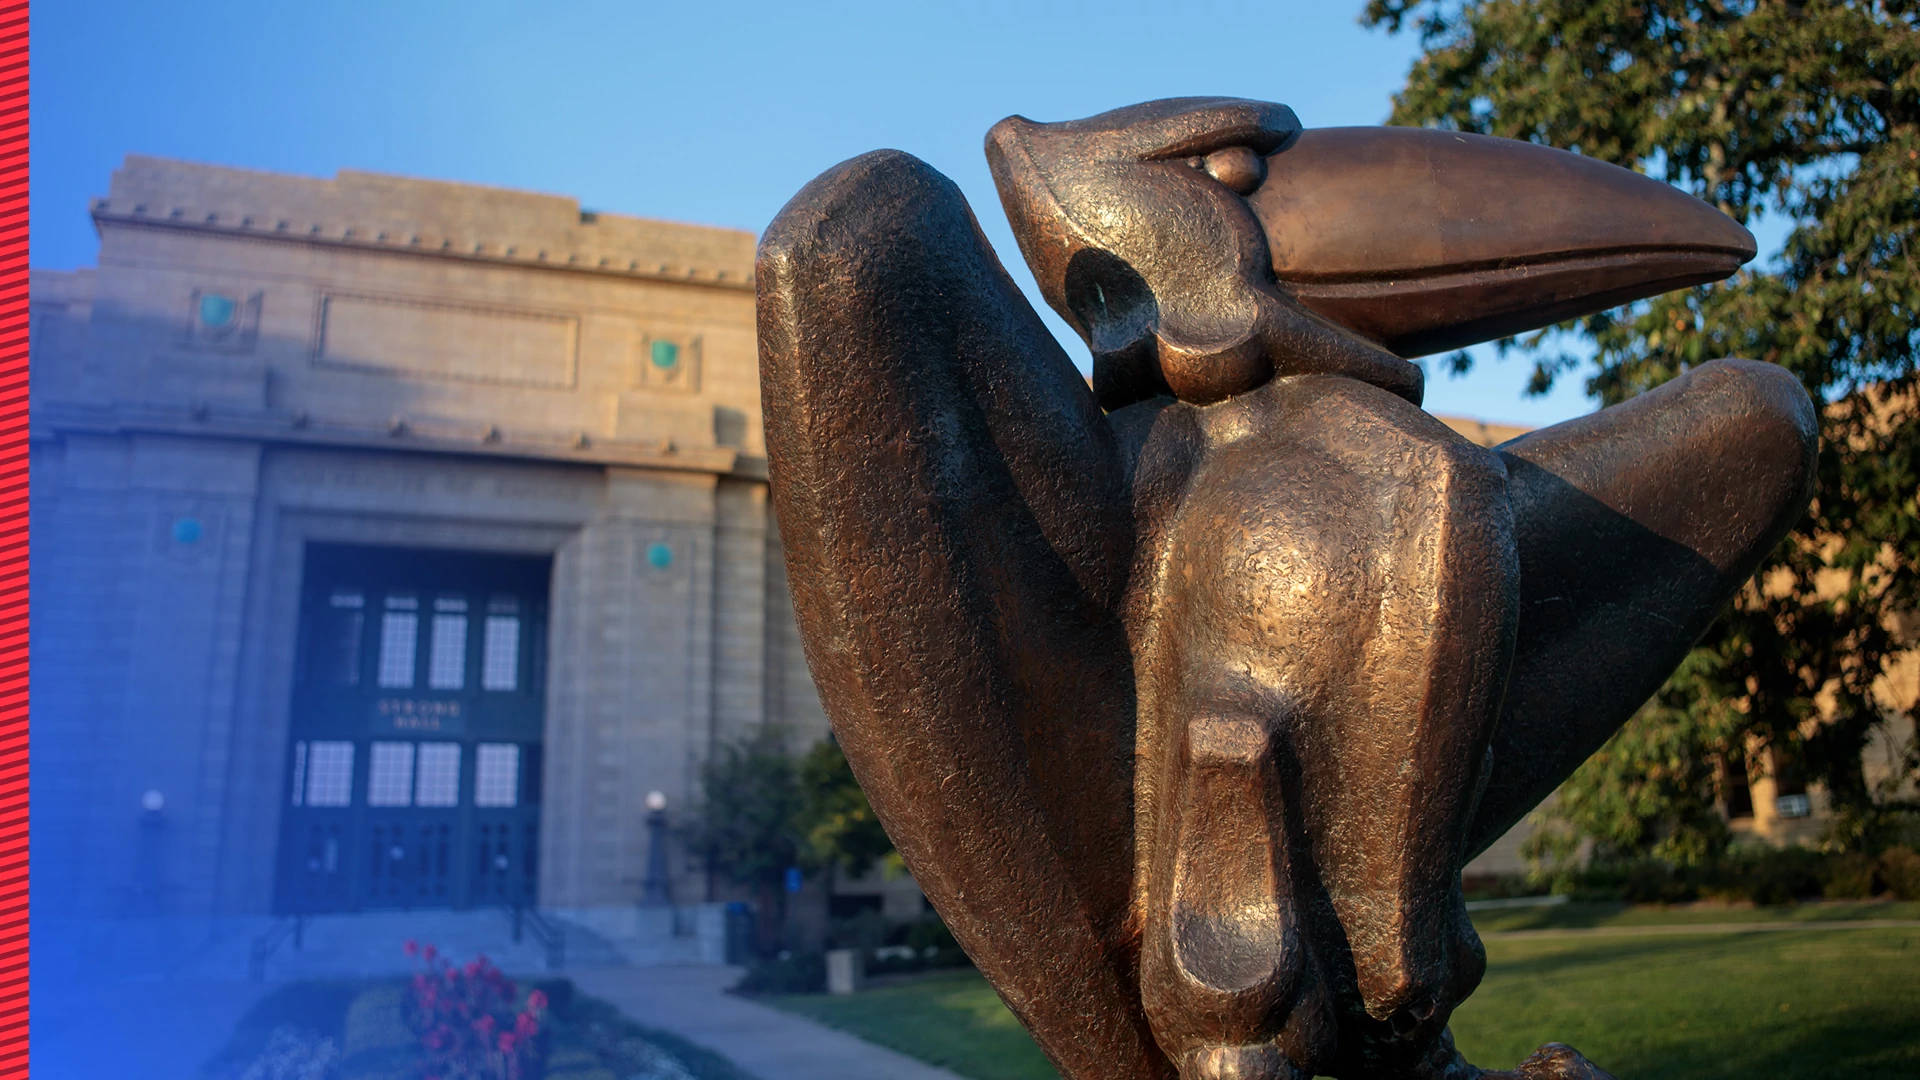 "The iconic bronze Jayhawk statue on the University of Kansas campus." Wallpaper